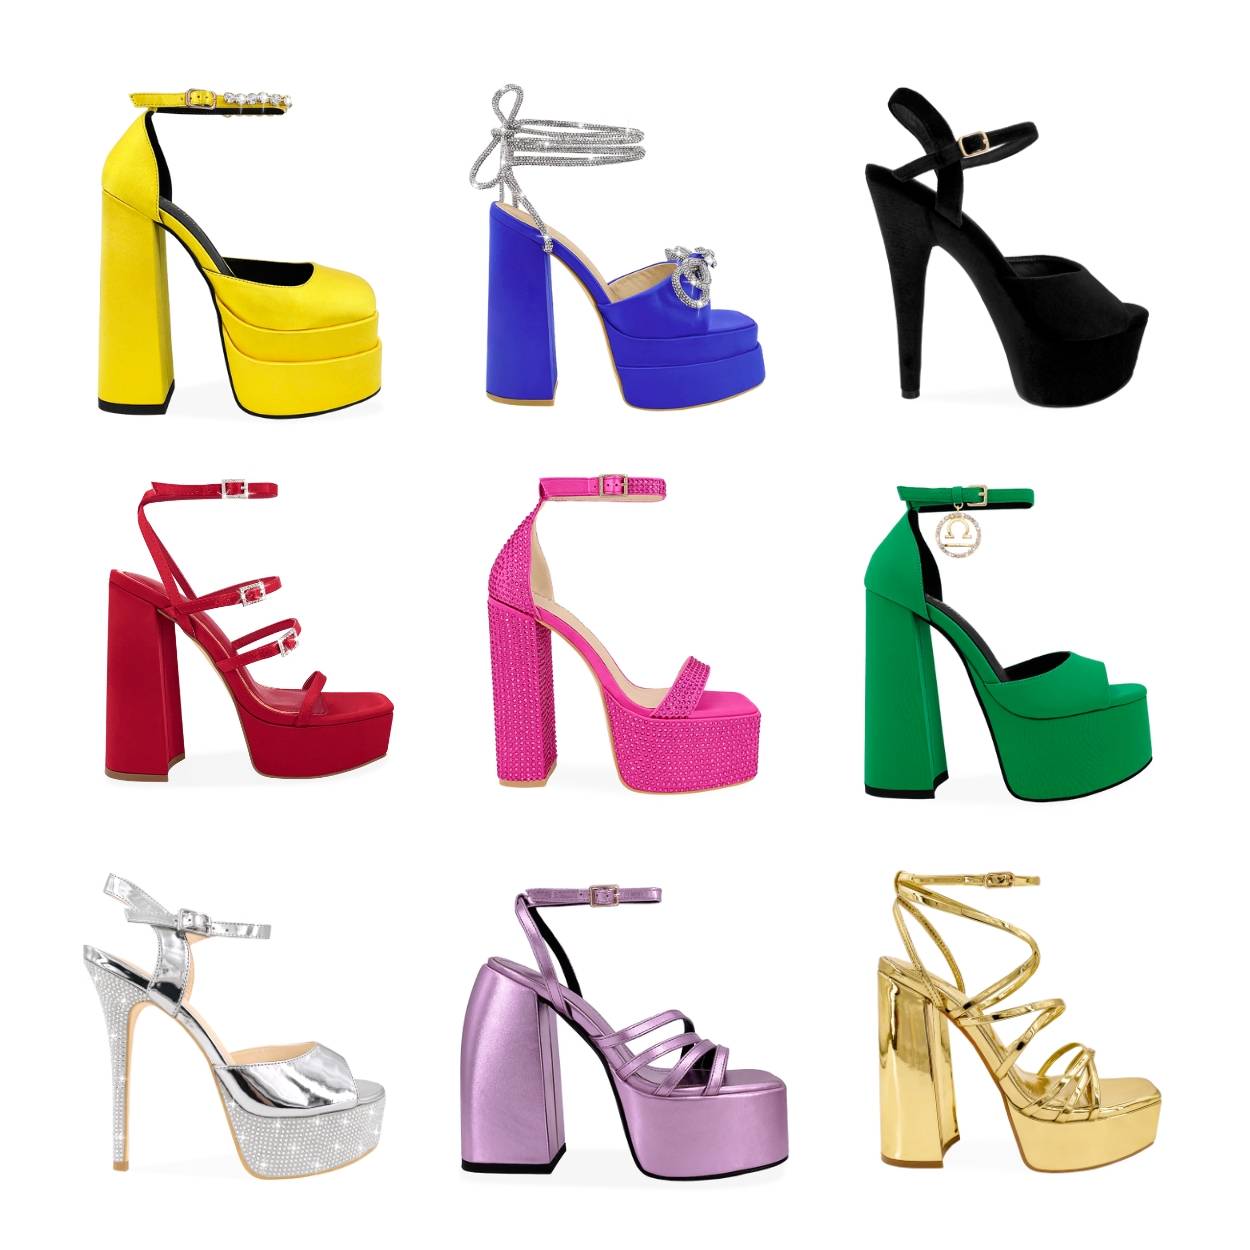 MY SHOES MEXICO | Zapatos de moda para mujer - Tacones Altos